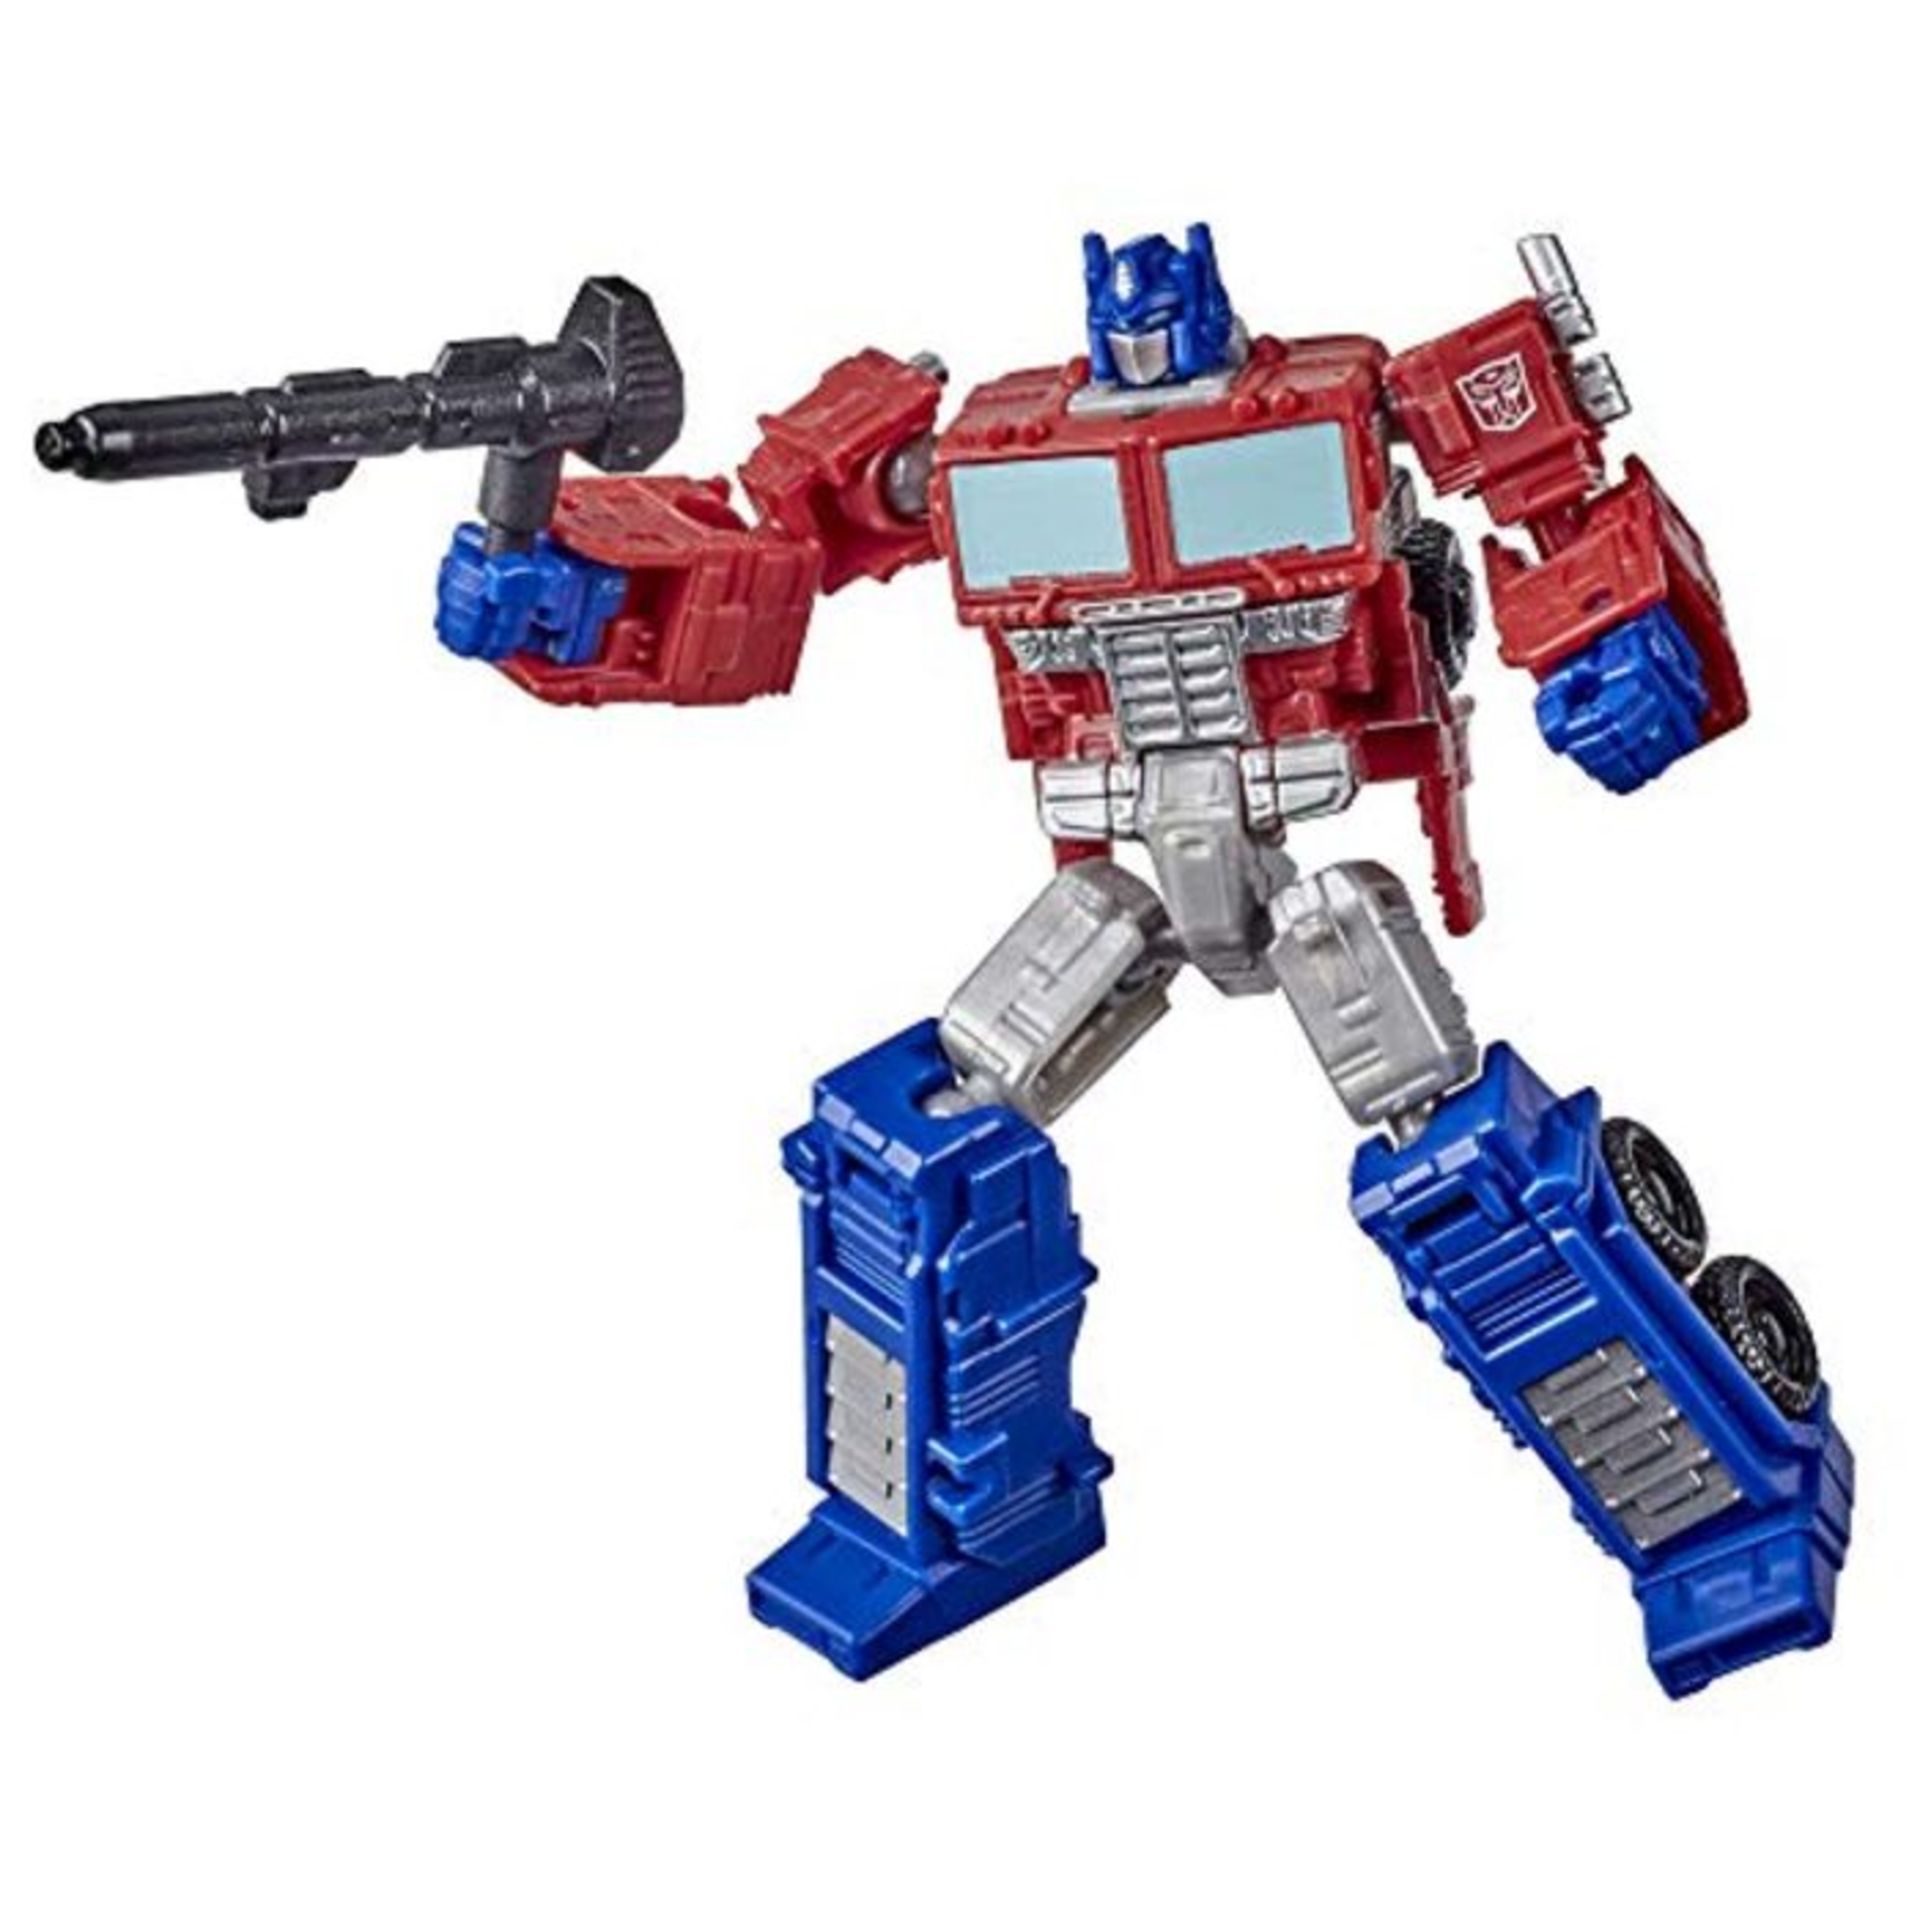 Transformers Toys Generations War for Cybertron: Kingdom Core Class WFC-K1 Optimus Pri